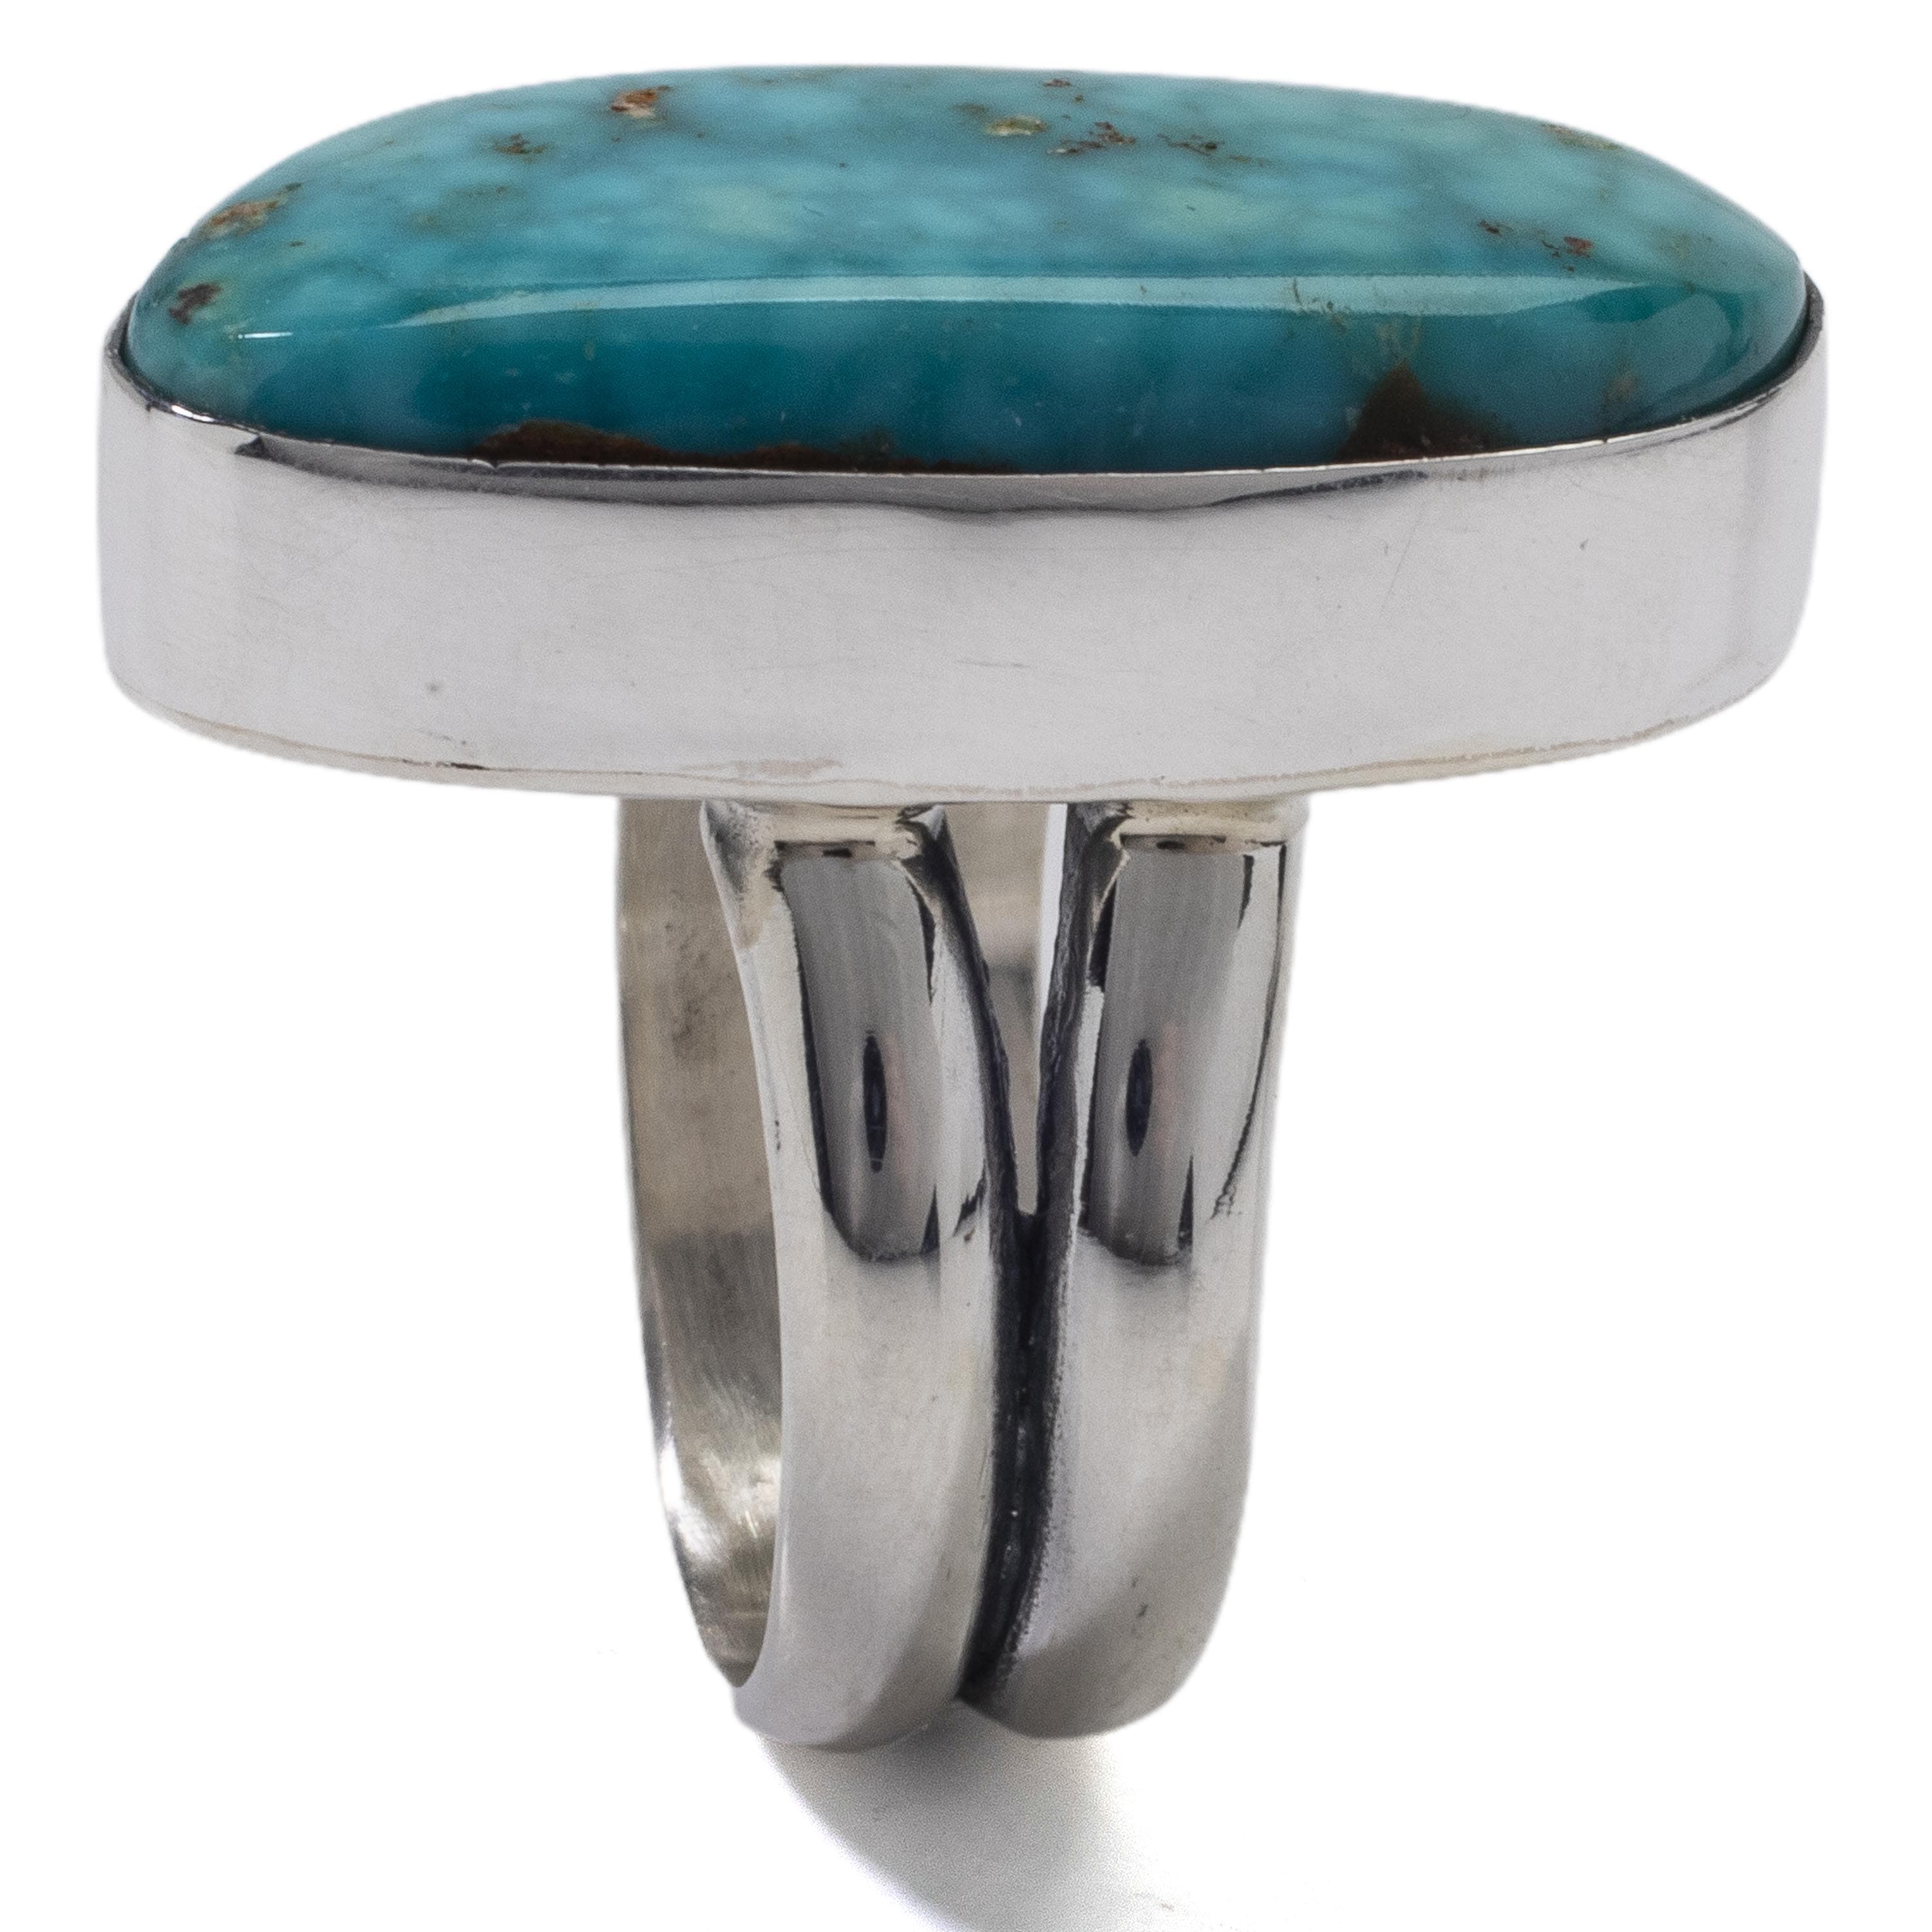 Kalifano Native American Jewelry 7 King Manassa Turquoise USA Handmade 925 Sterling Silver Ring NAR500.037.7